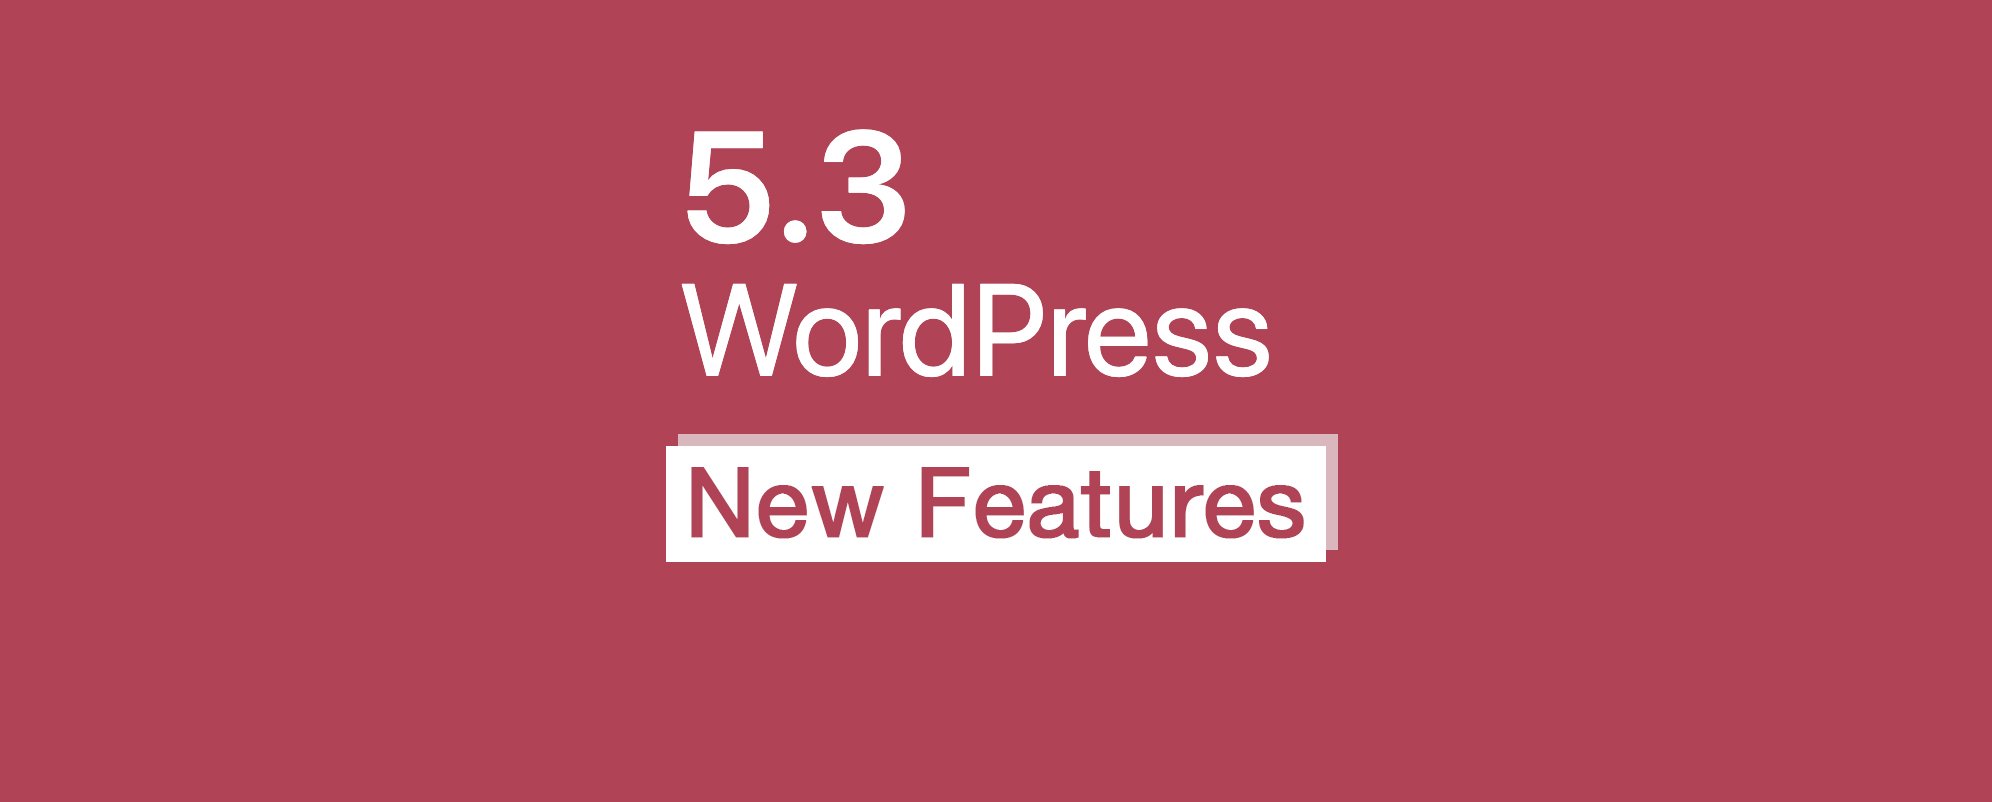 WordPress 5.3 Updates